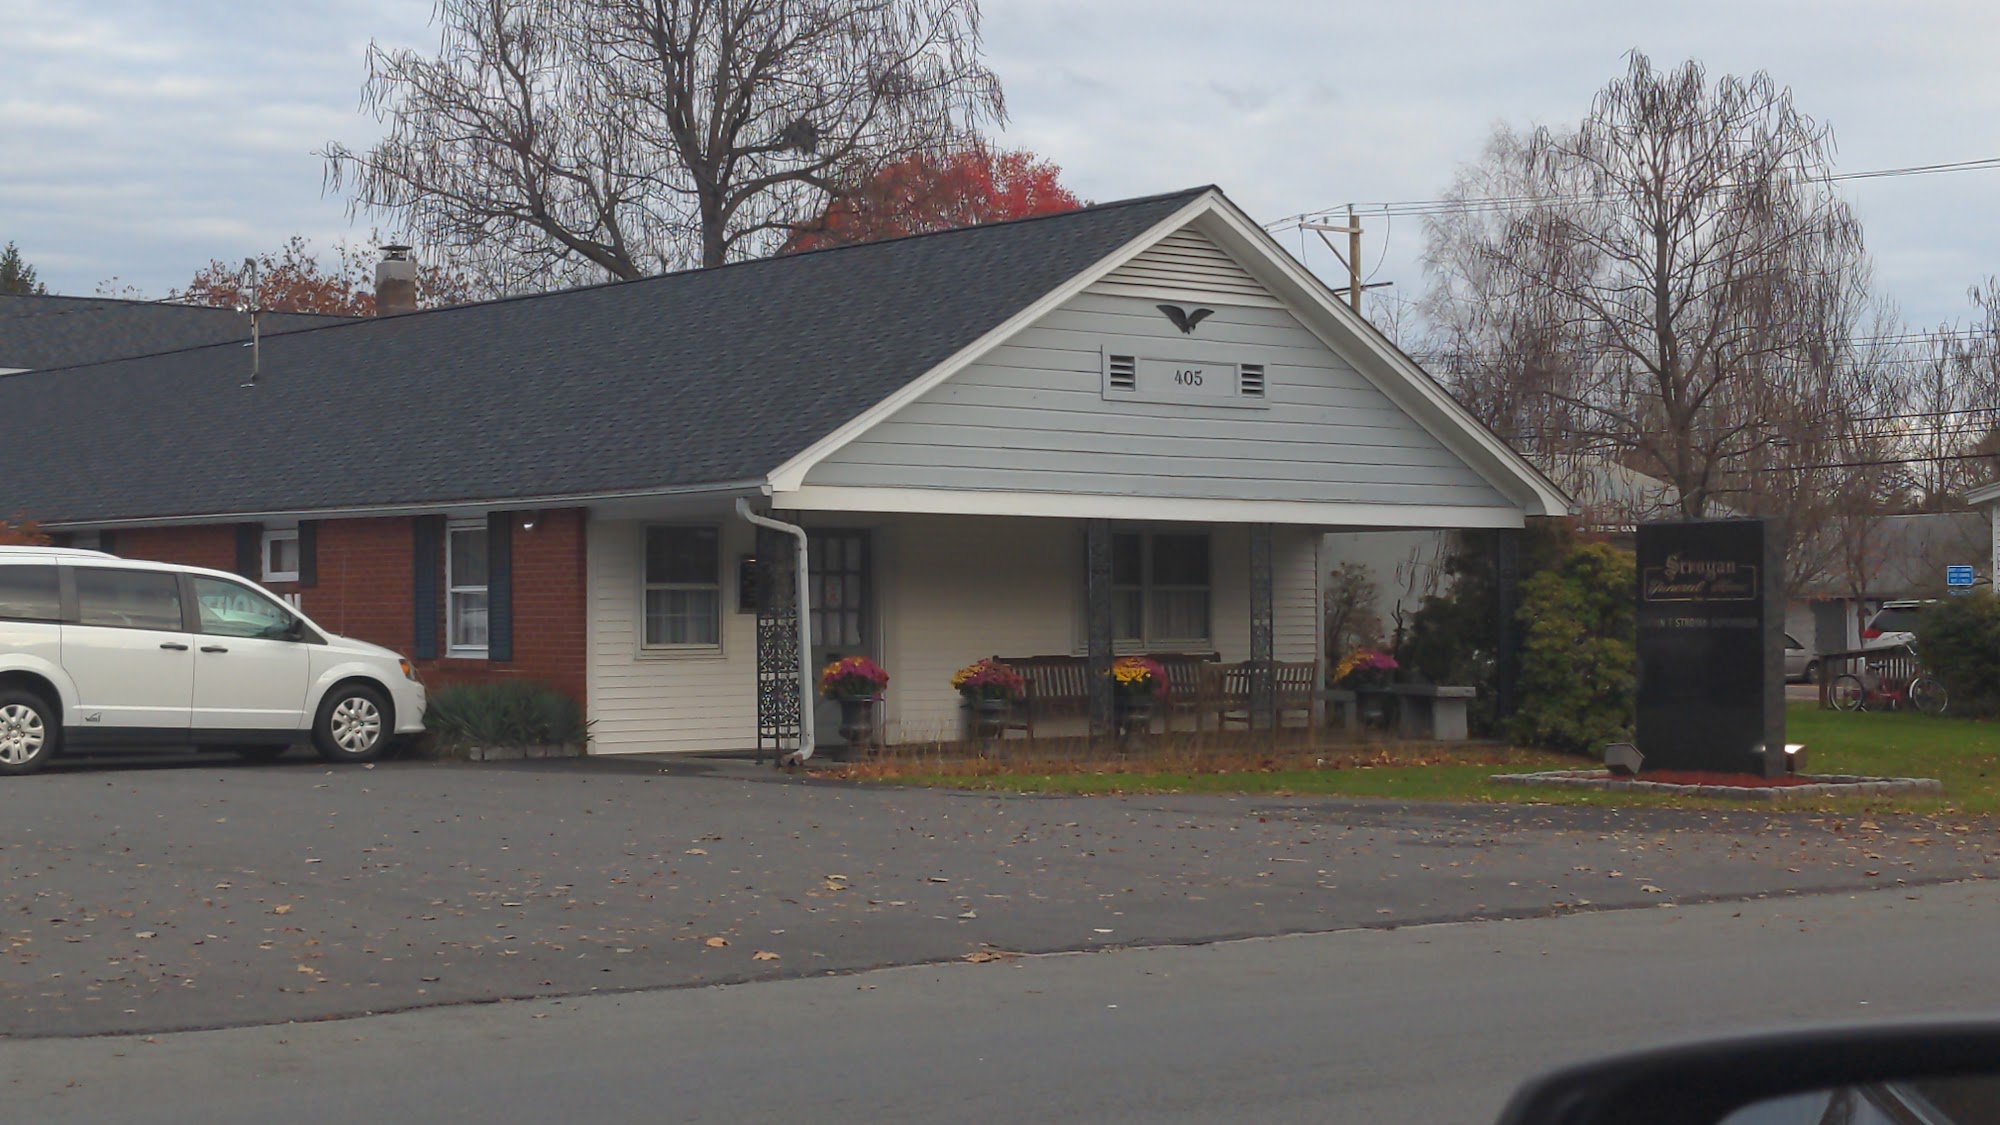 Stroyan Funeral Home Inc 405 W Harford St, Milford Pennsylvania 18337